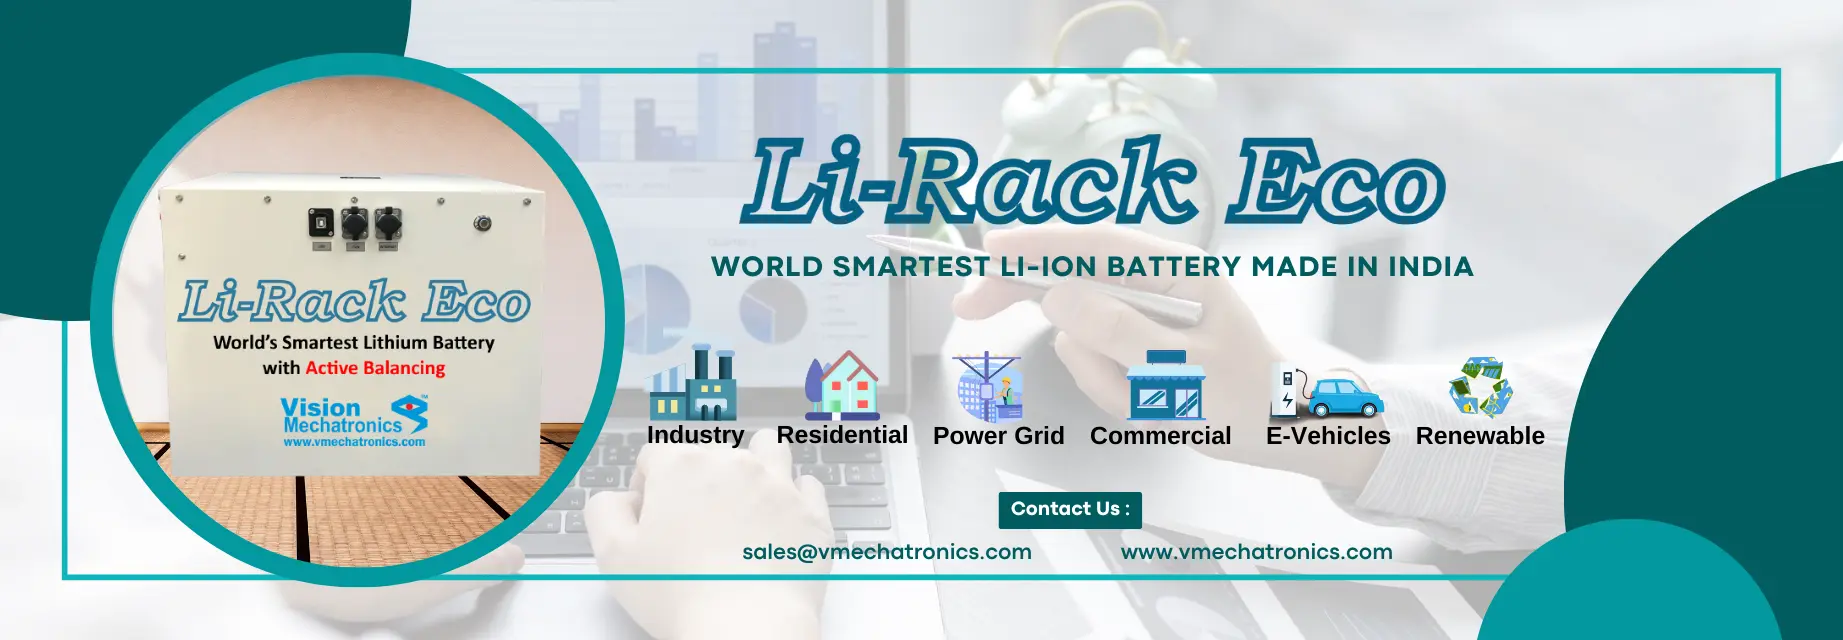 Li Rack Eco – Efficient Lithium Battery in India